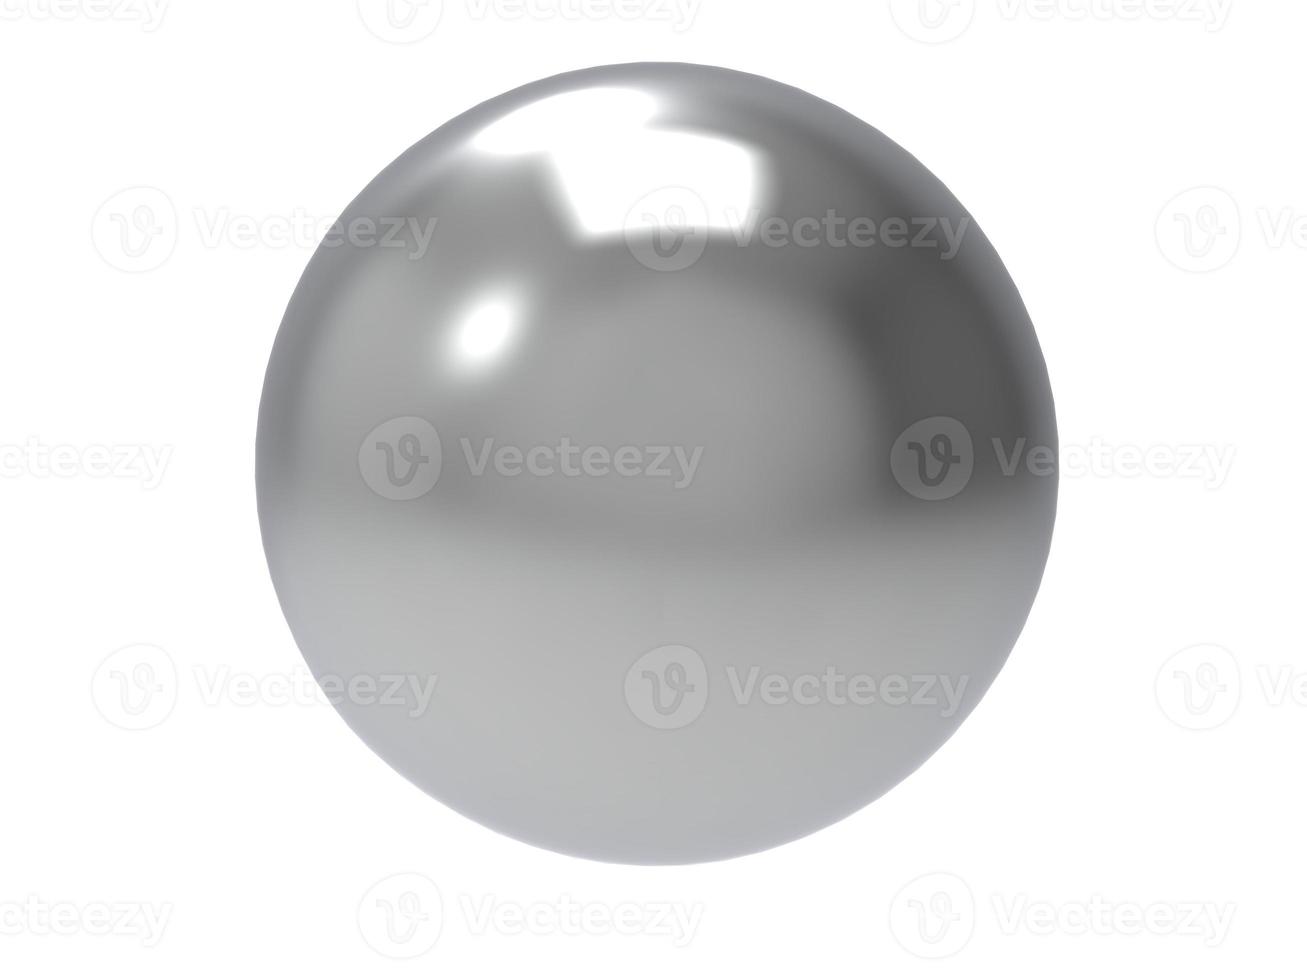 Chromed metal sphere. 3d render. photo